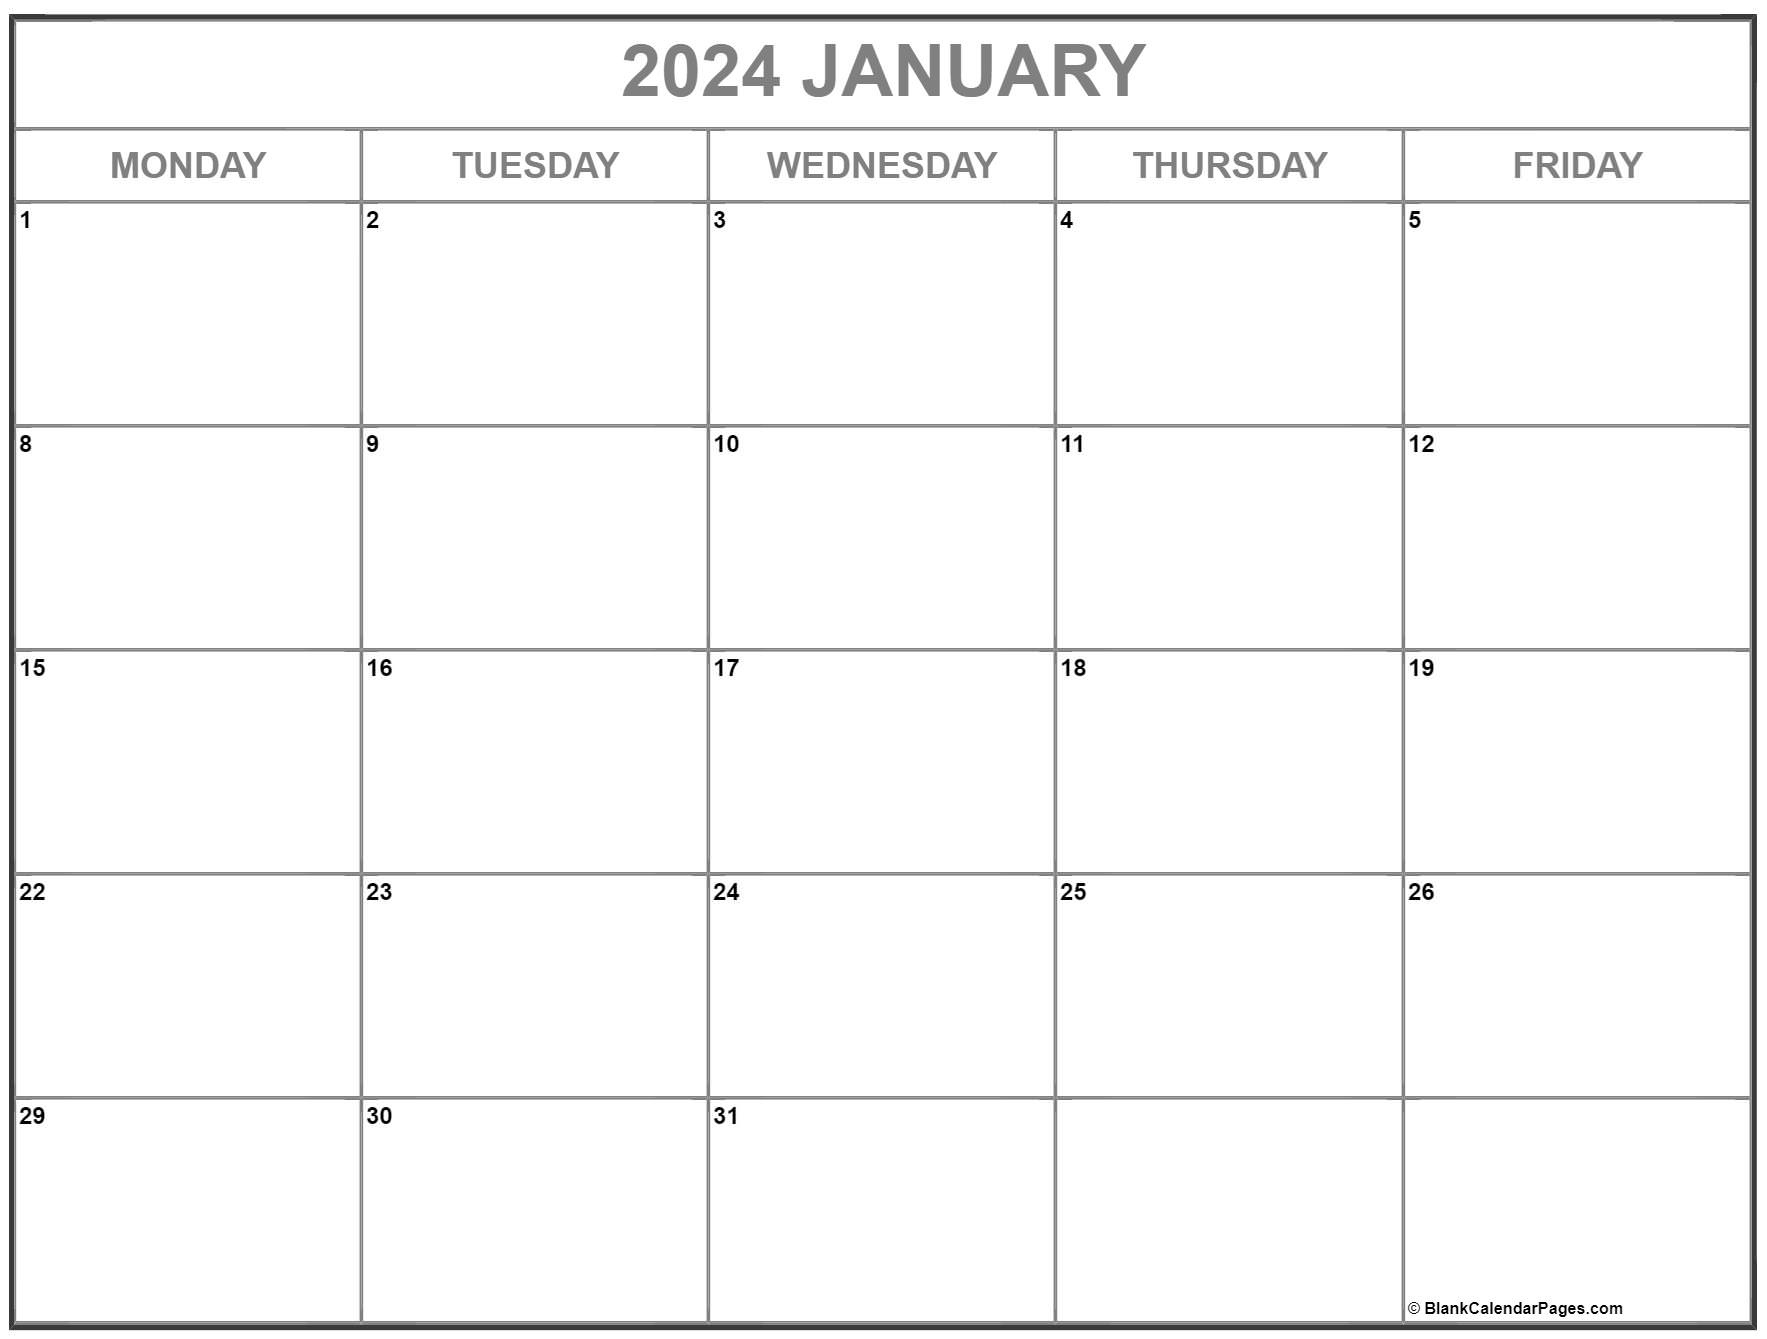 January 2020 Monday Calendar | Monday to Sunday